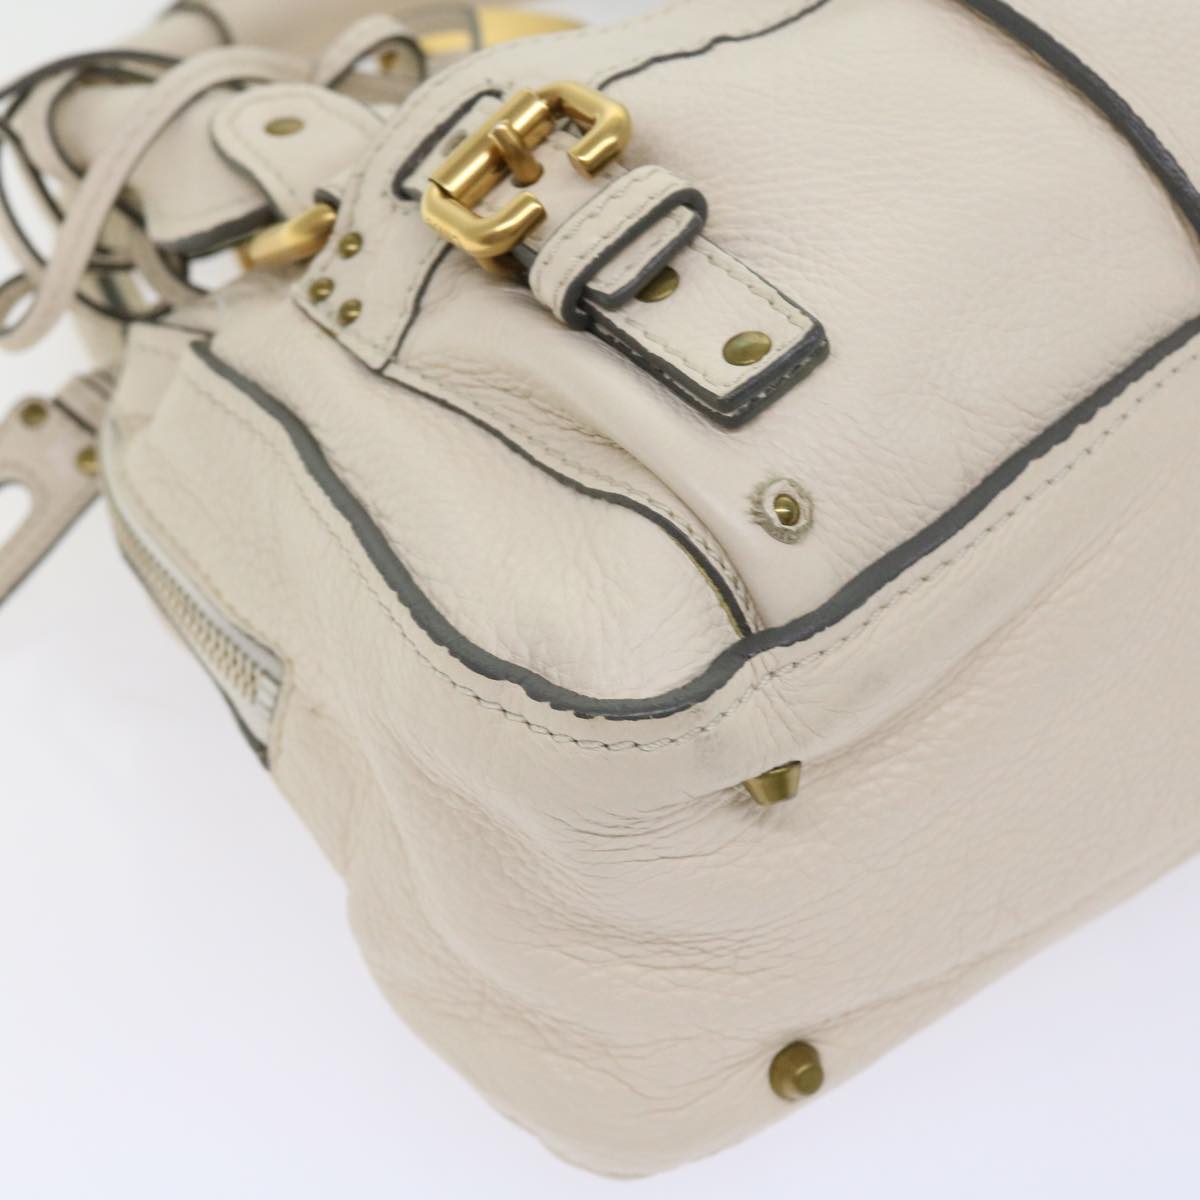 Chloe Paddington Hand Bag Leather White 01-08-53-2 Auth 54104